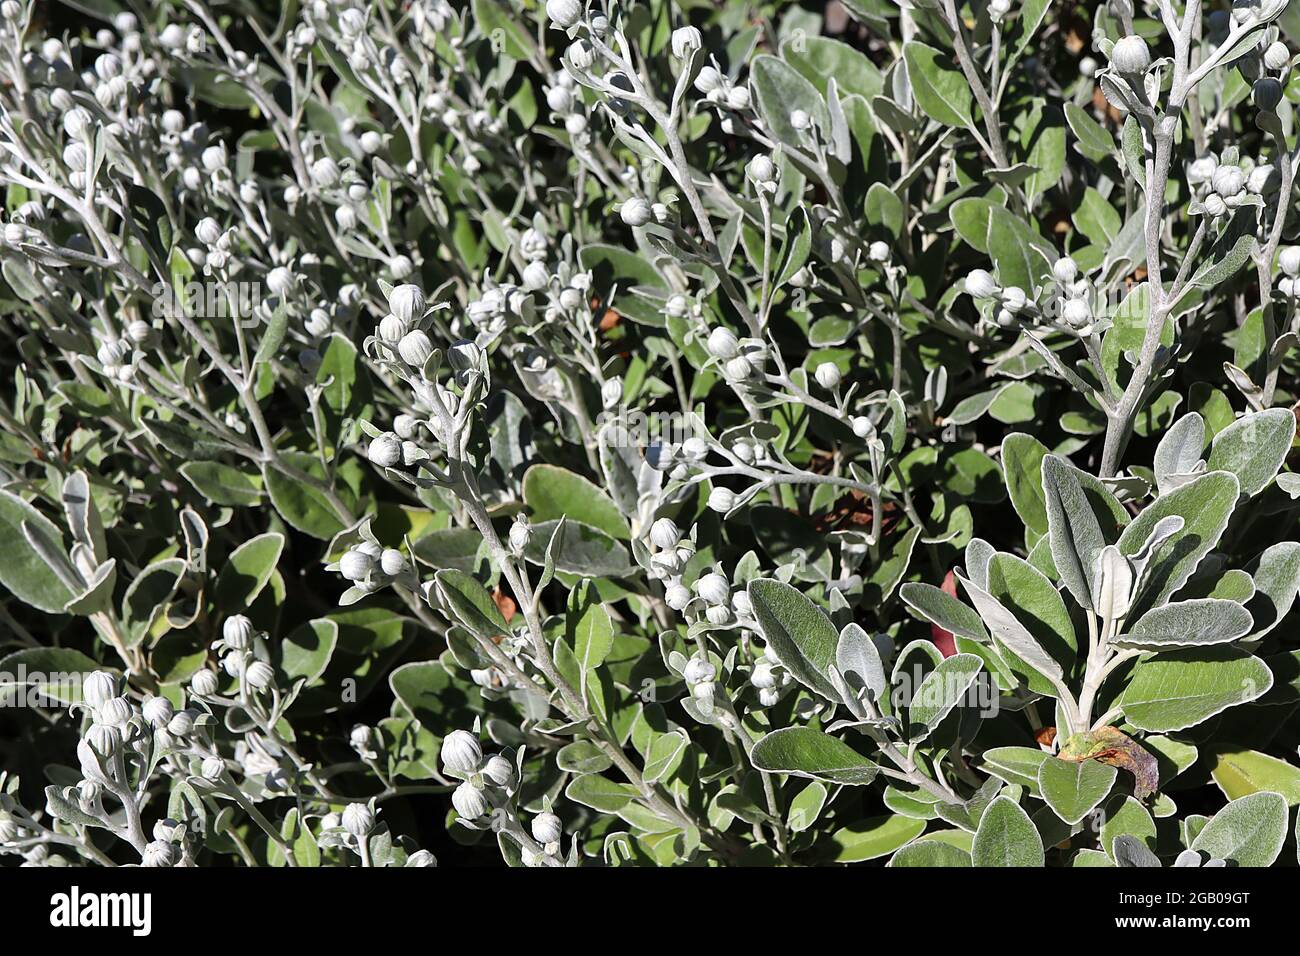 Brachyglottis / Senecio greyi ‘Sunshine’ Daisy Bush – silberne Blütenknospen und silbergraue Blätter, Juni, England, Großbritannien Stockfoto